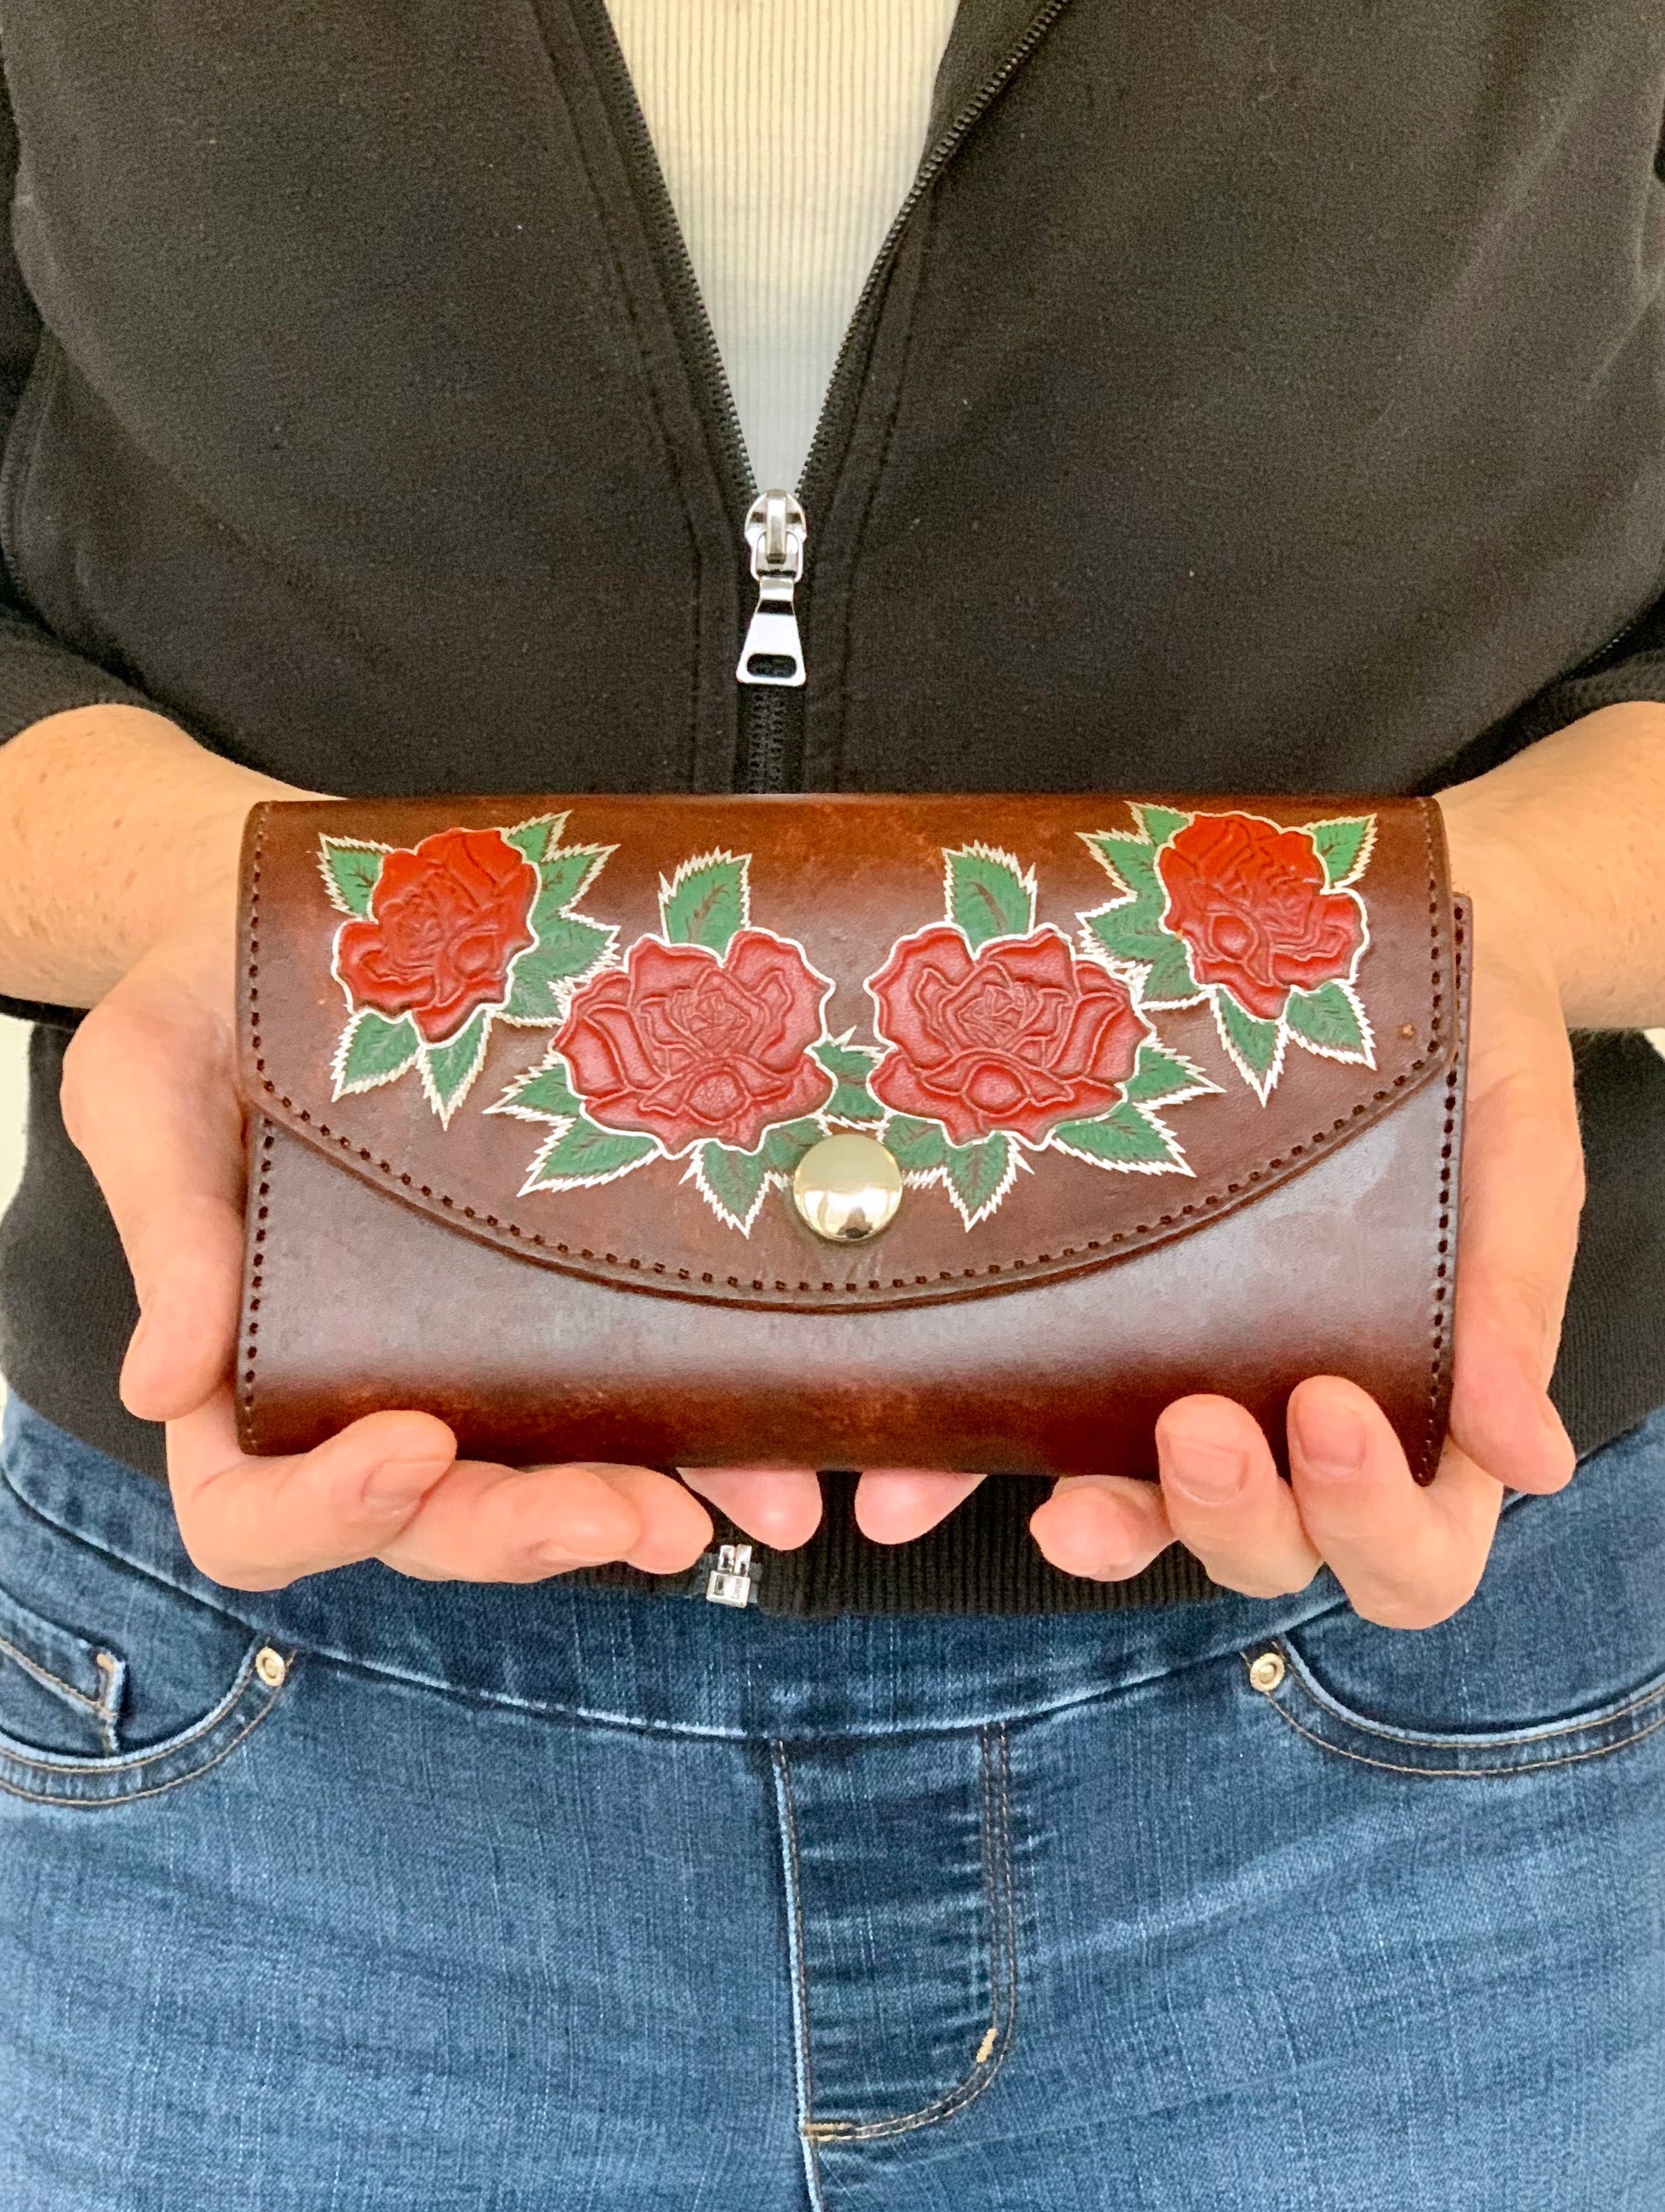 Custom Painted Wallet Clutch